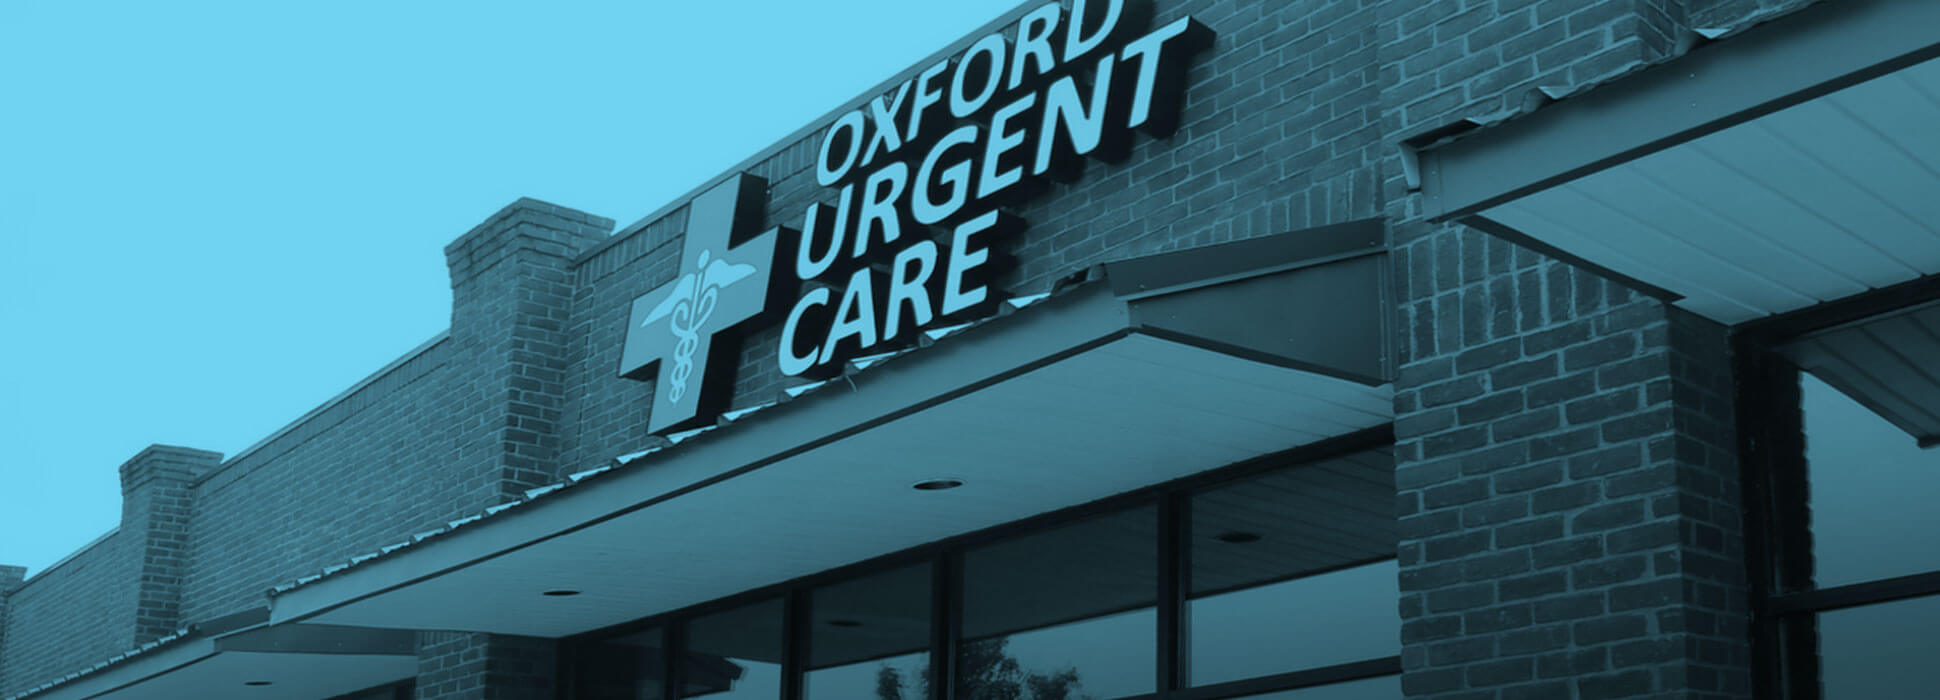 Oxford Urgent Care building